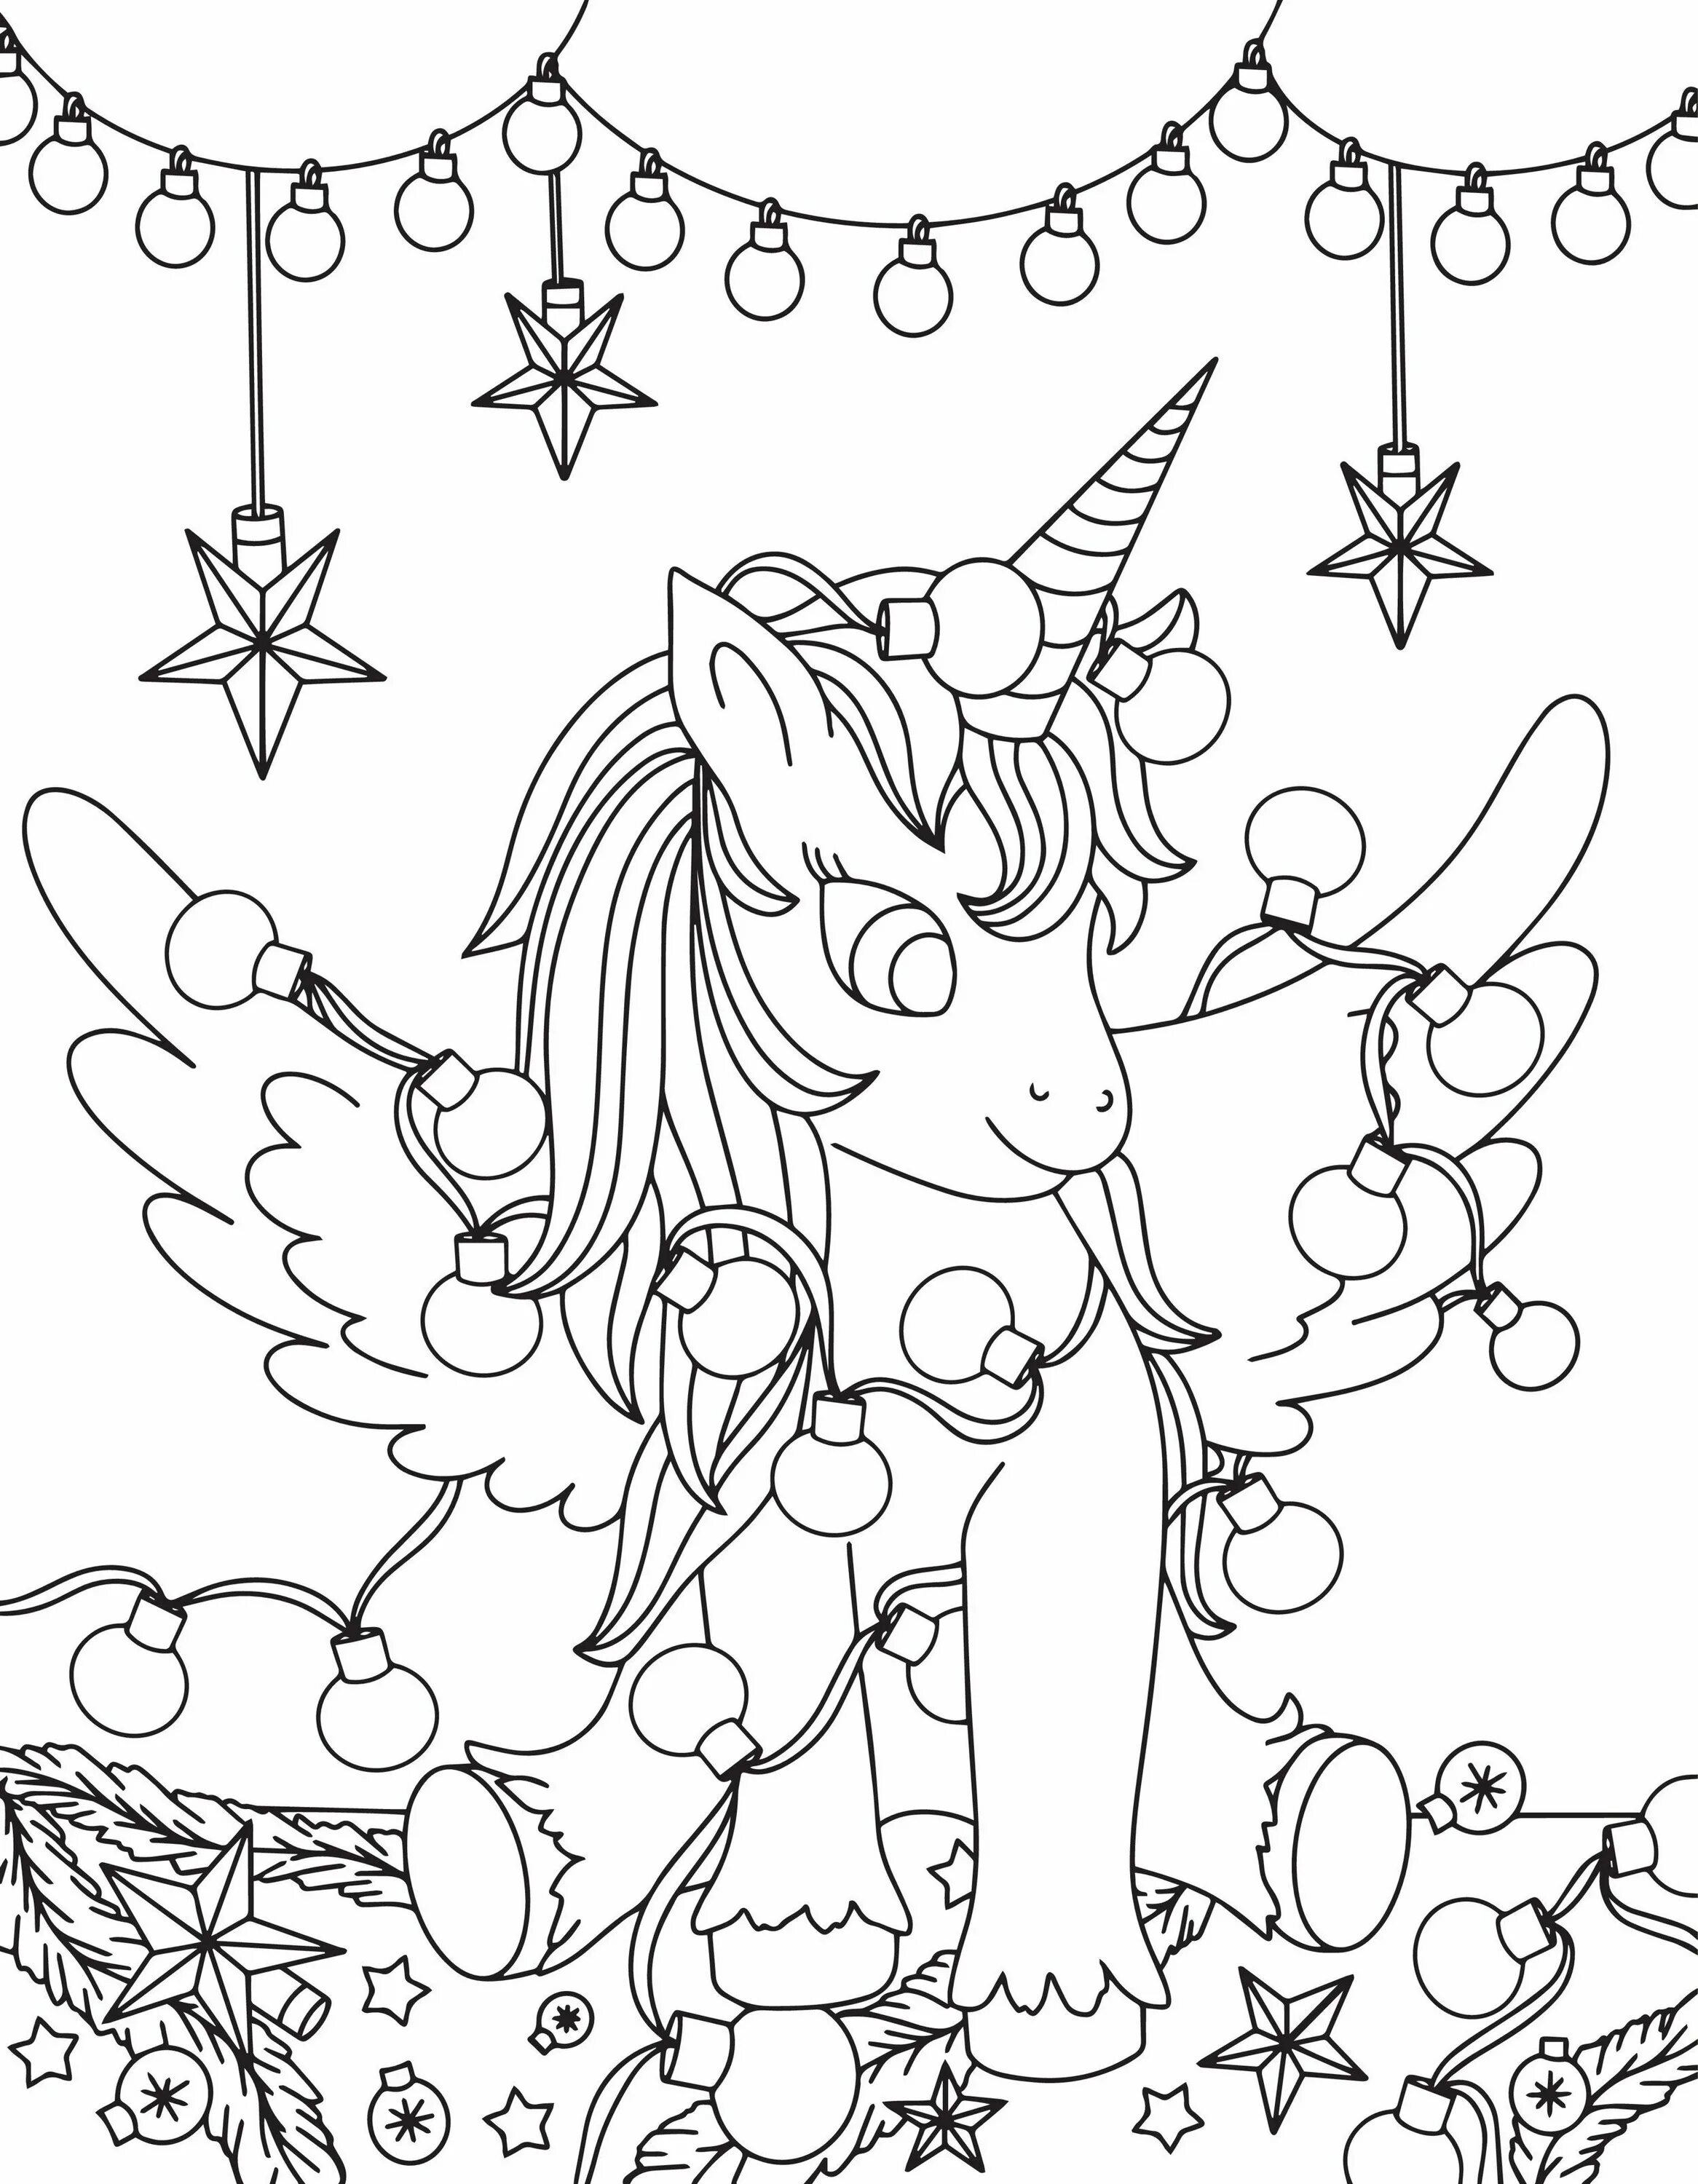 Christmas unicorn #3